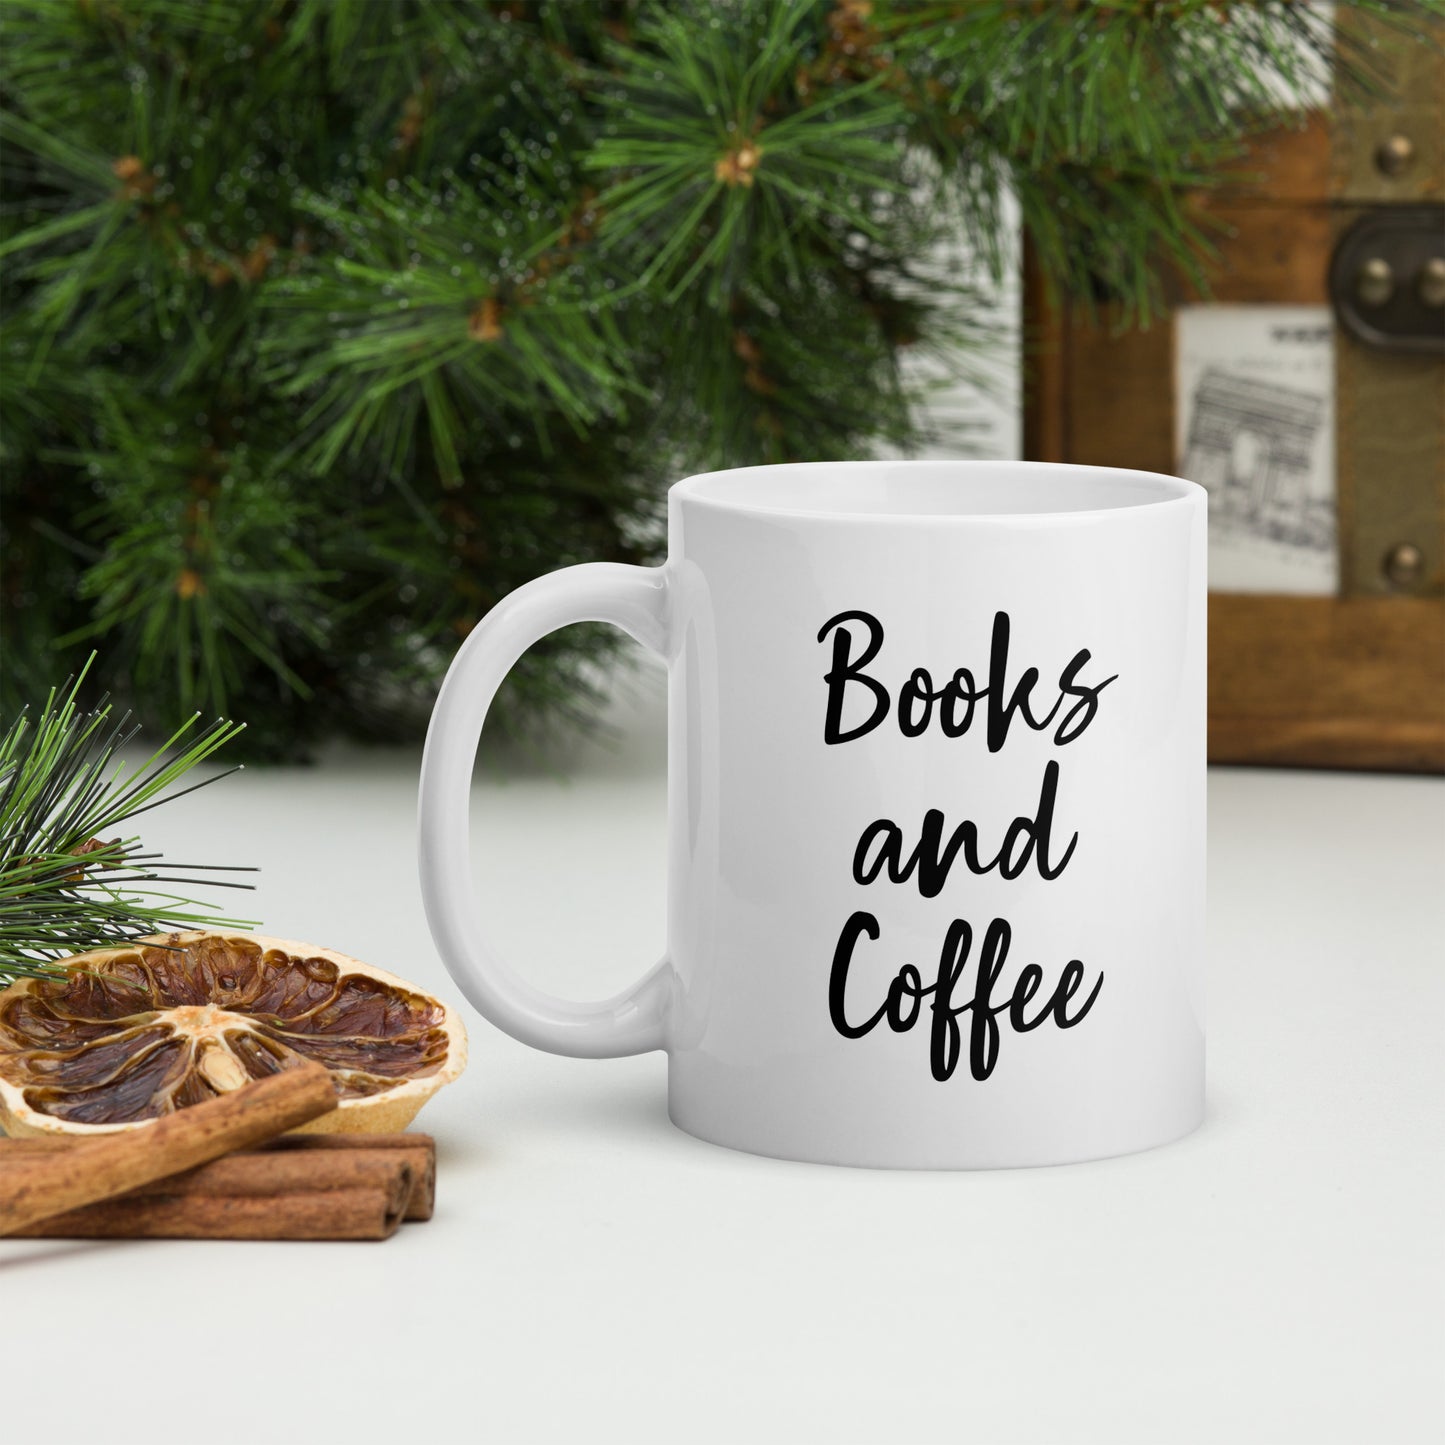 Books and Coffee glossy mug